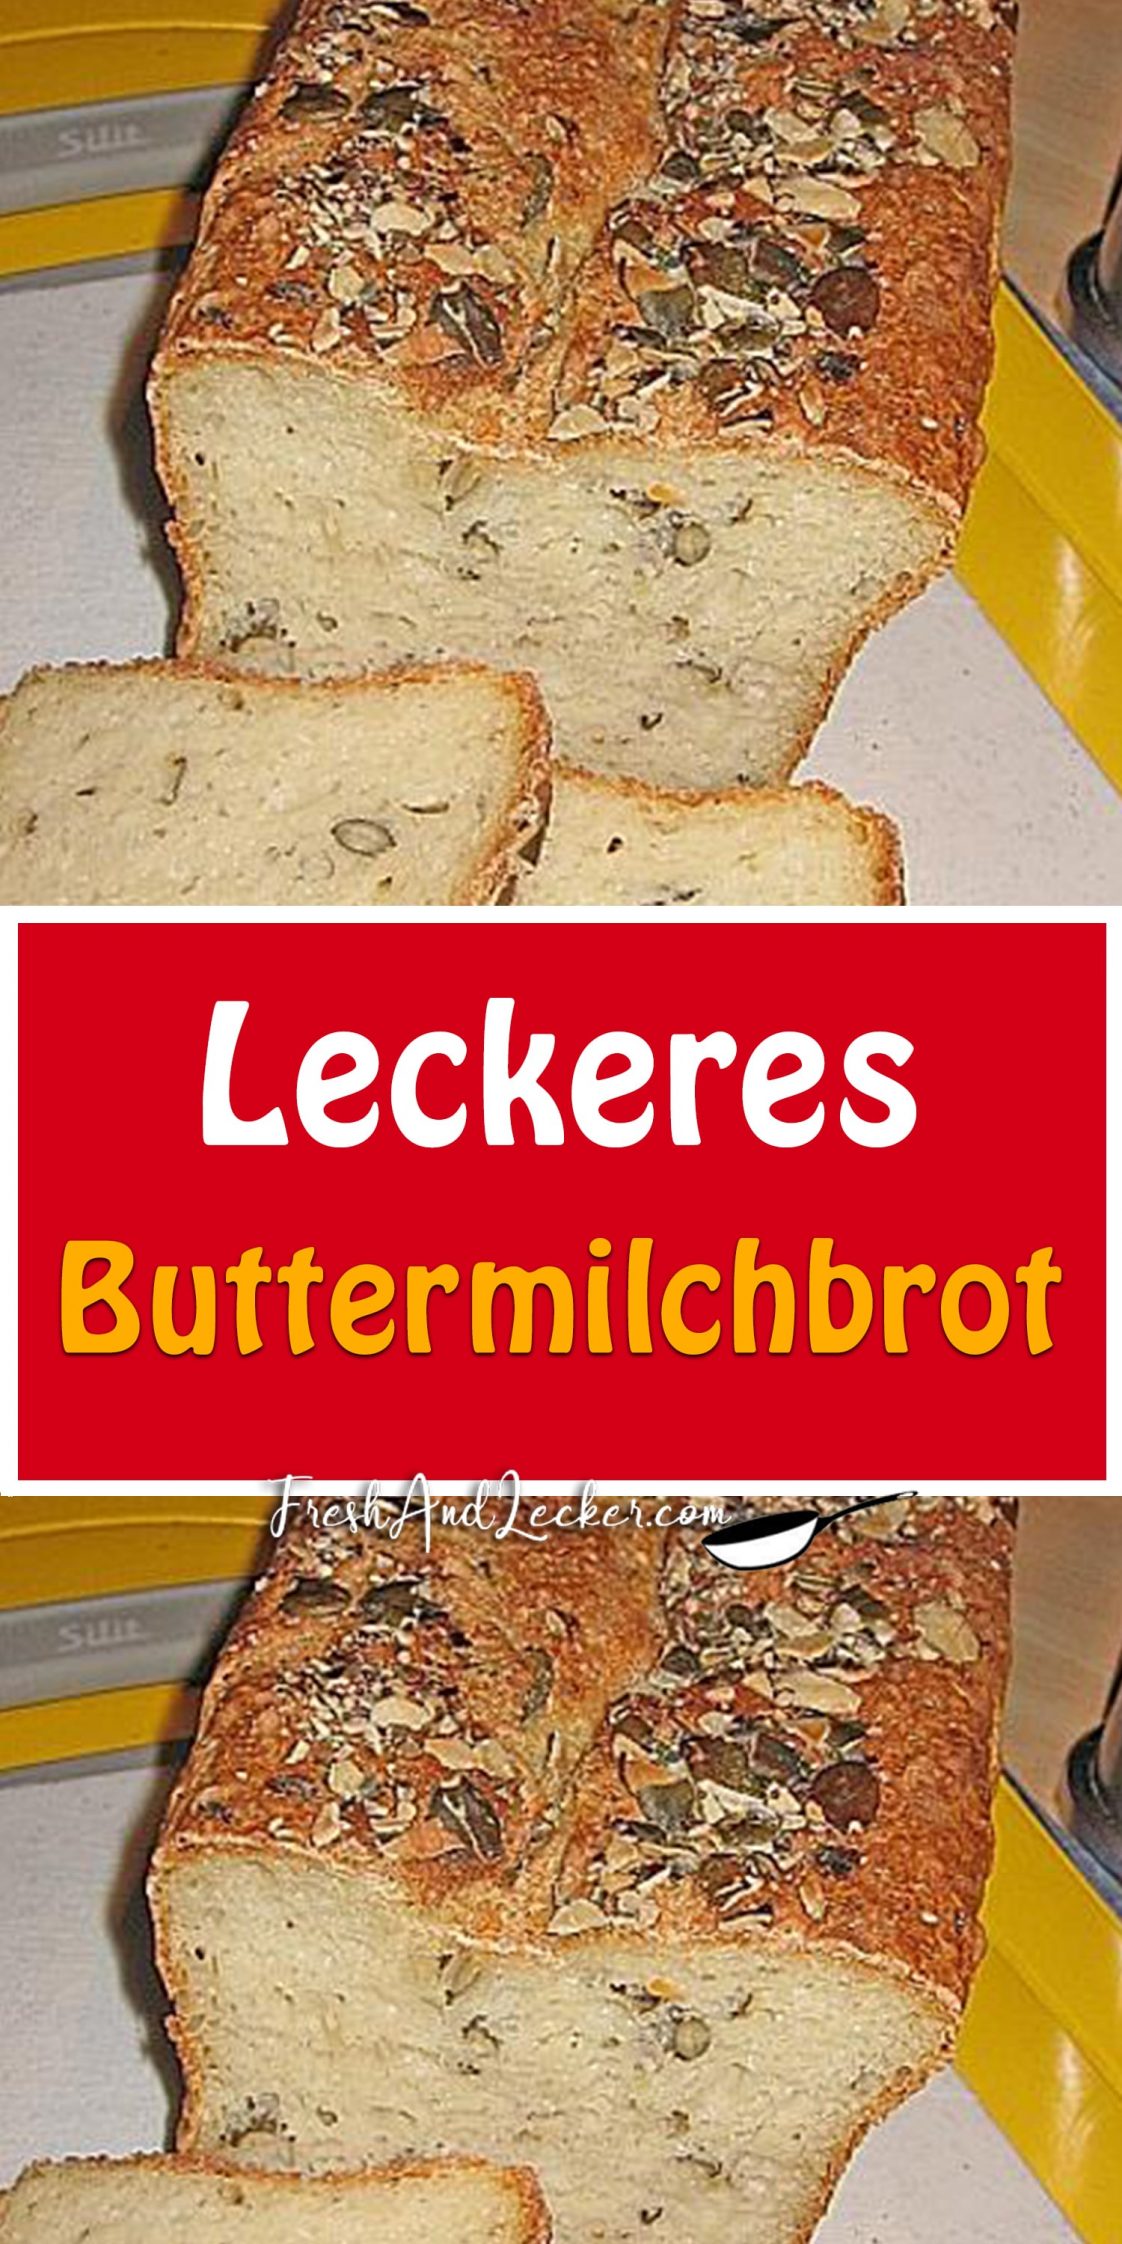 Leckeres Buttermilchbrot - Fresh Lecker